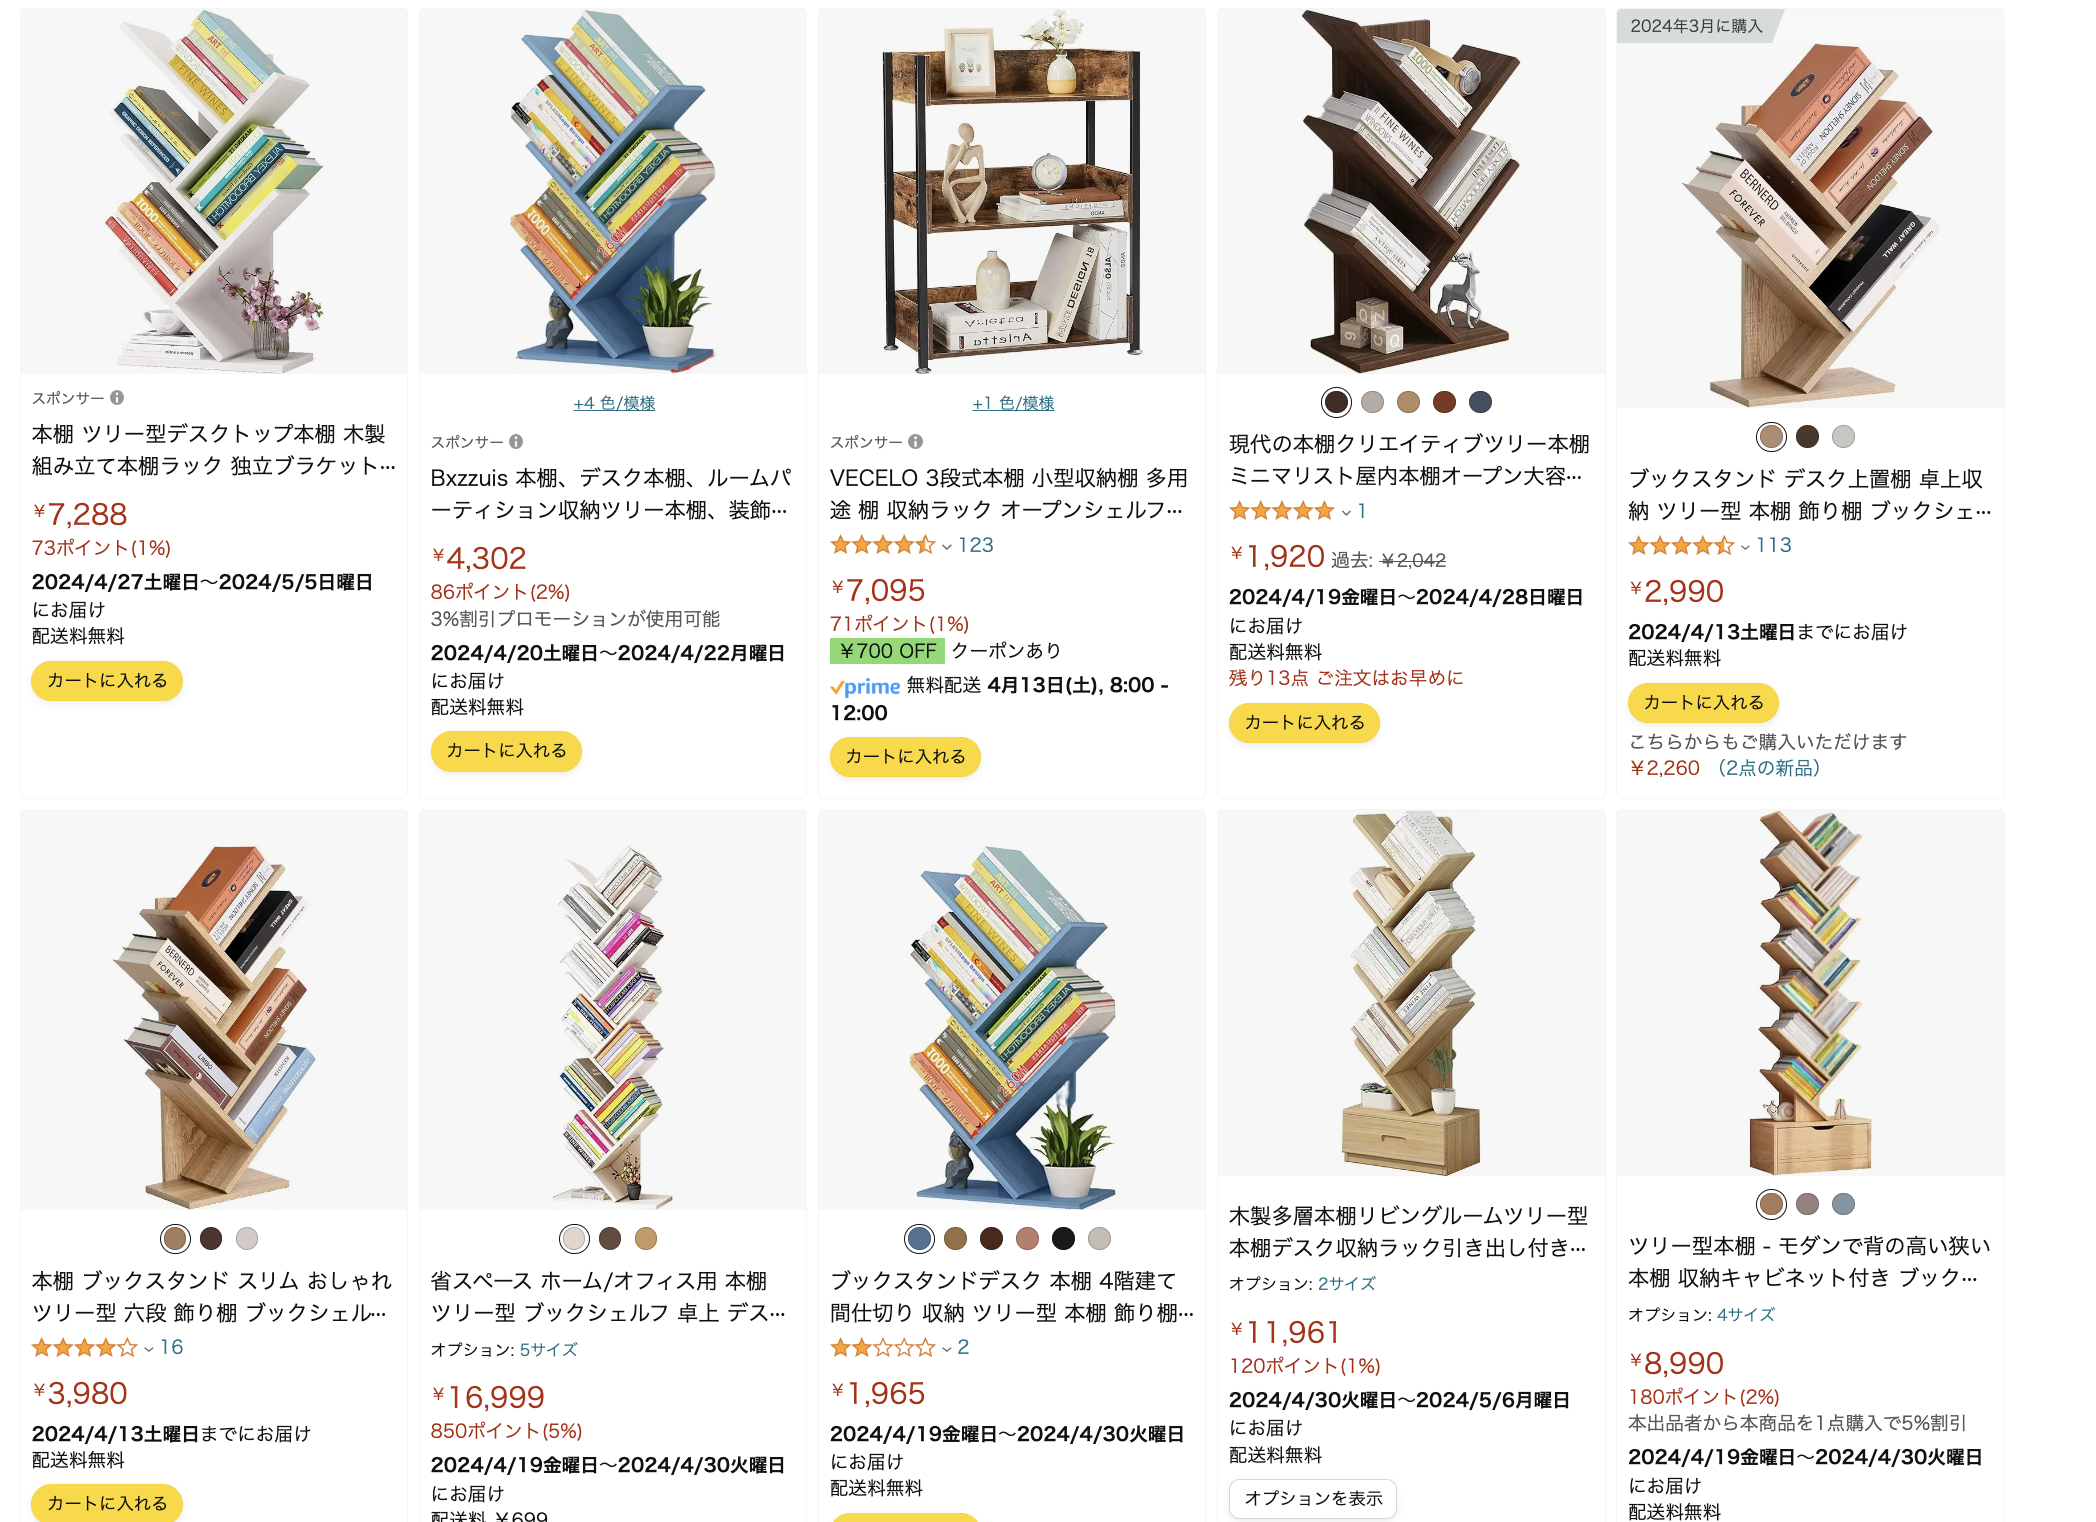 Amazonで「ツリー型本棚」で検索